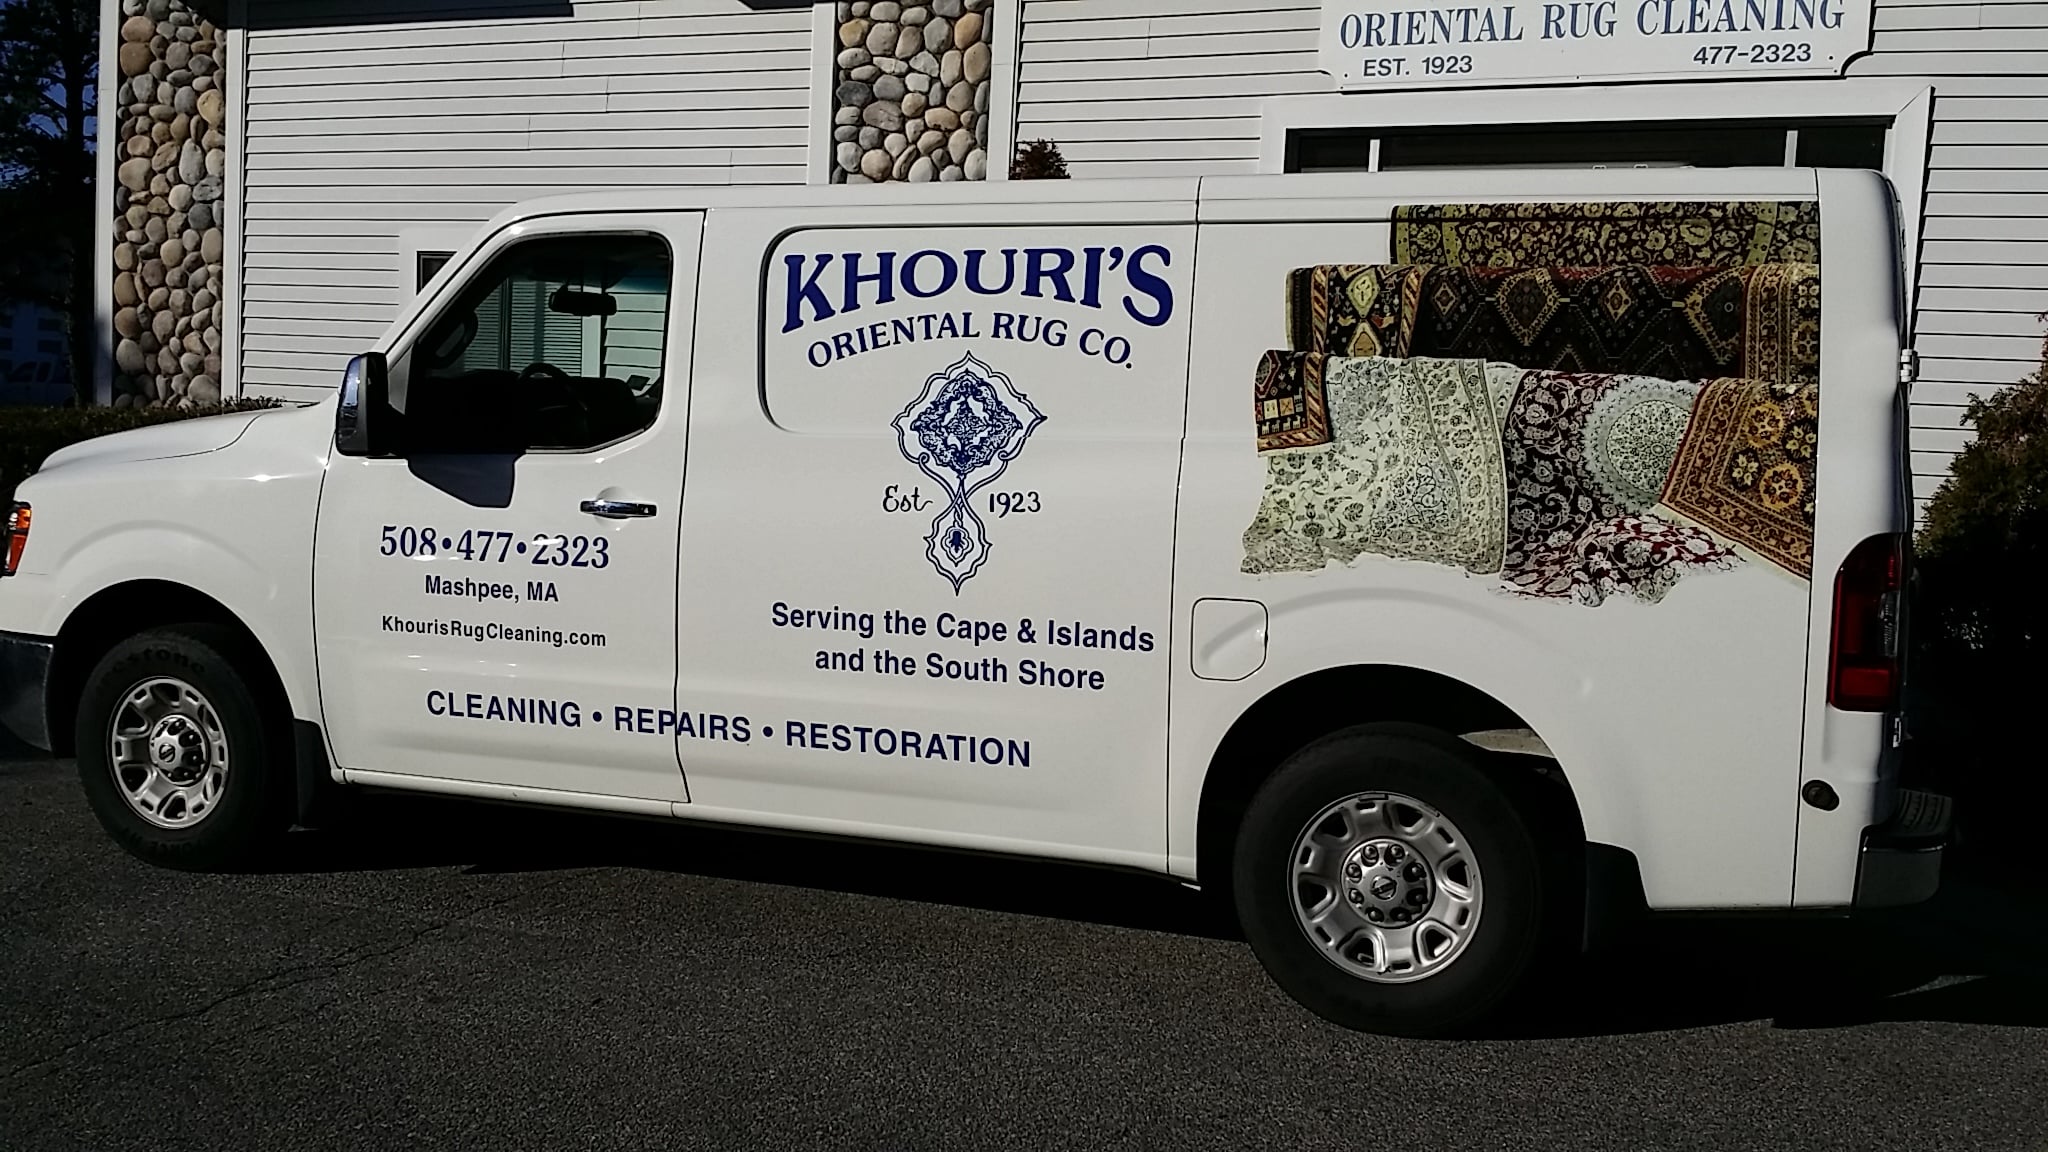 Khouri's Oriental Rug Cleaning Truck